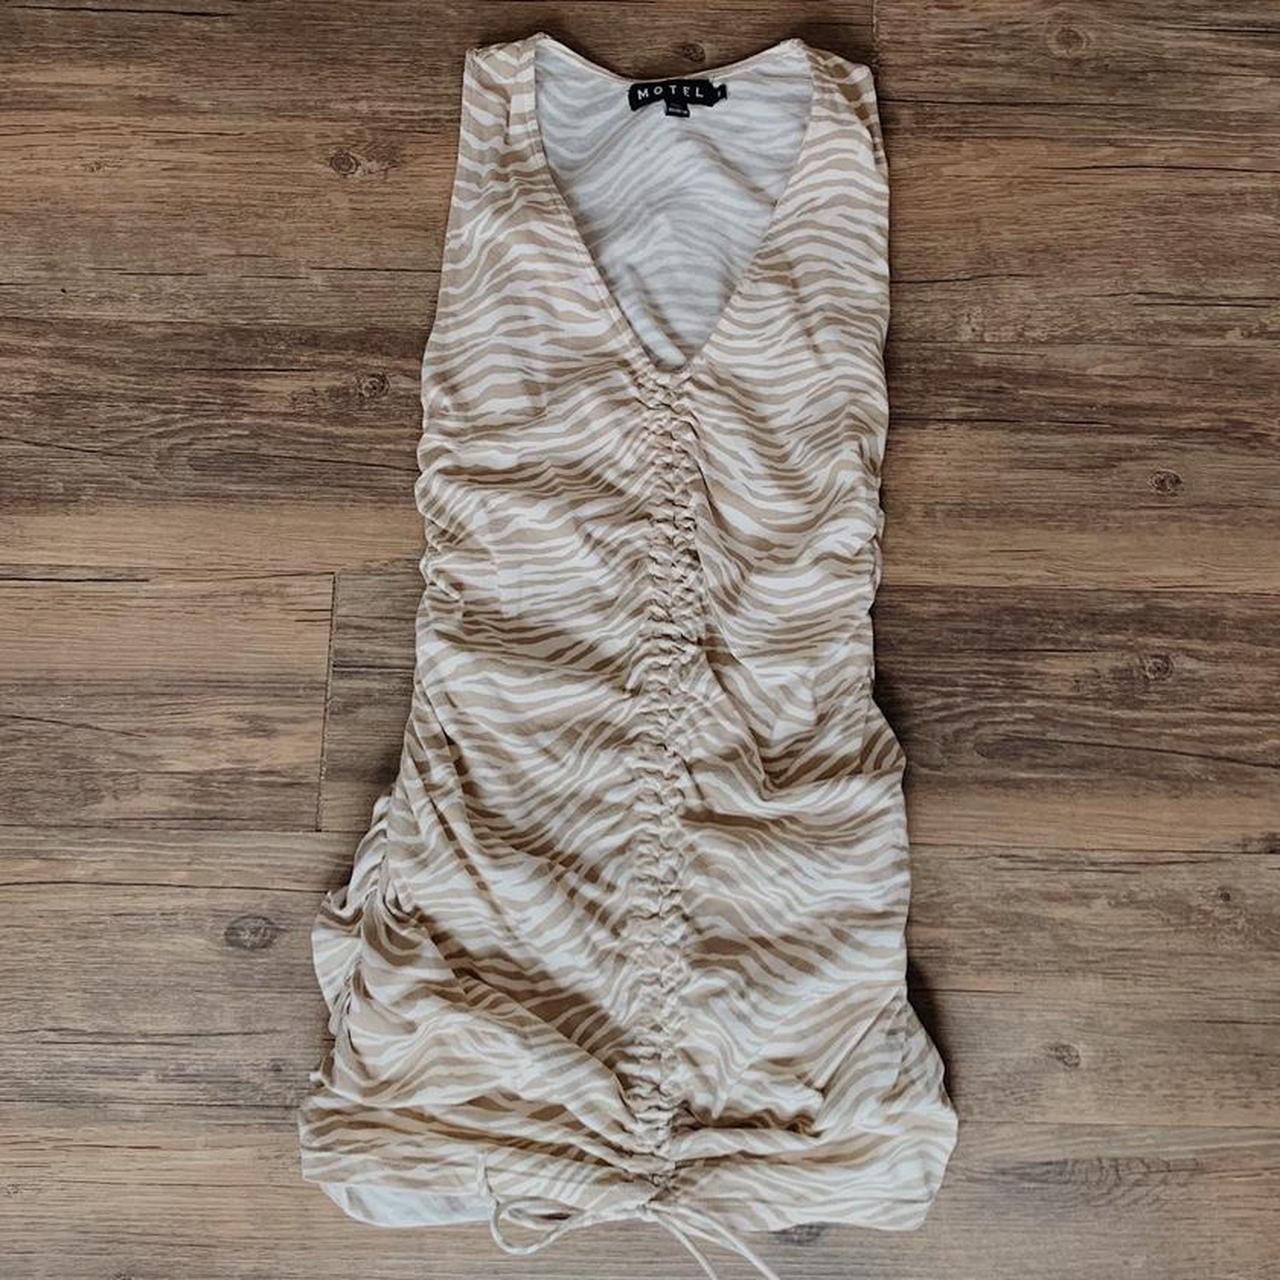 Motel rocks beige / white zebra print dress, size... - Depop